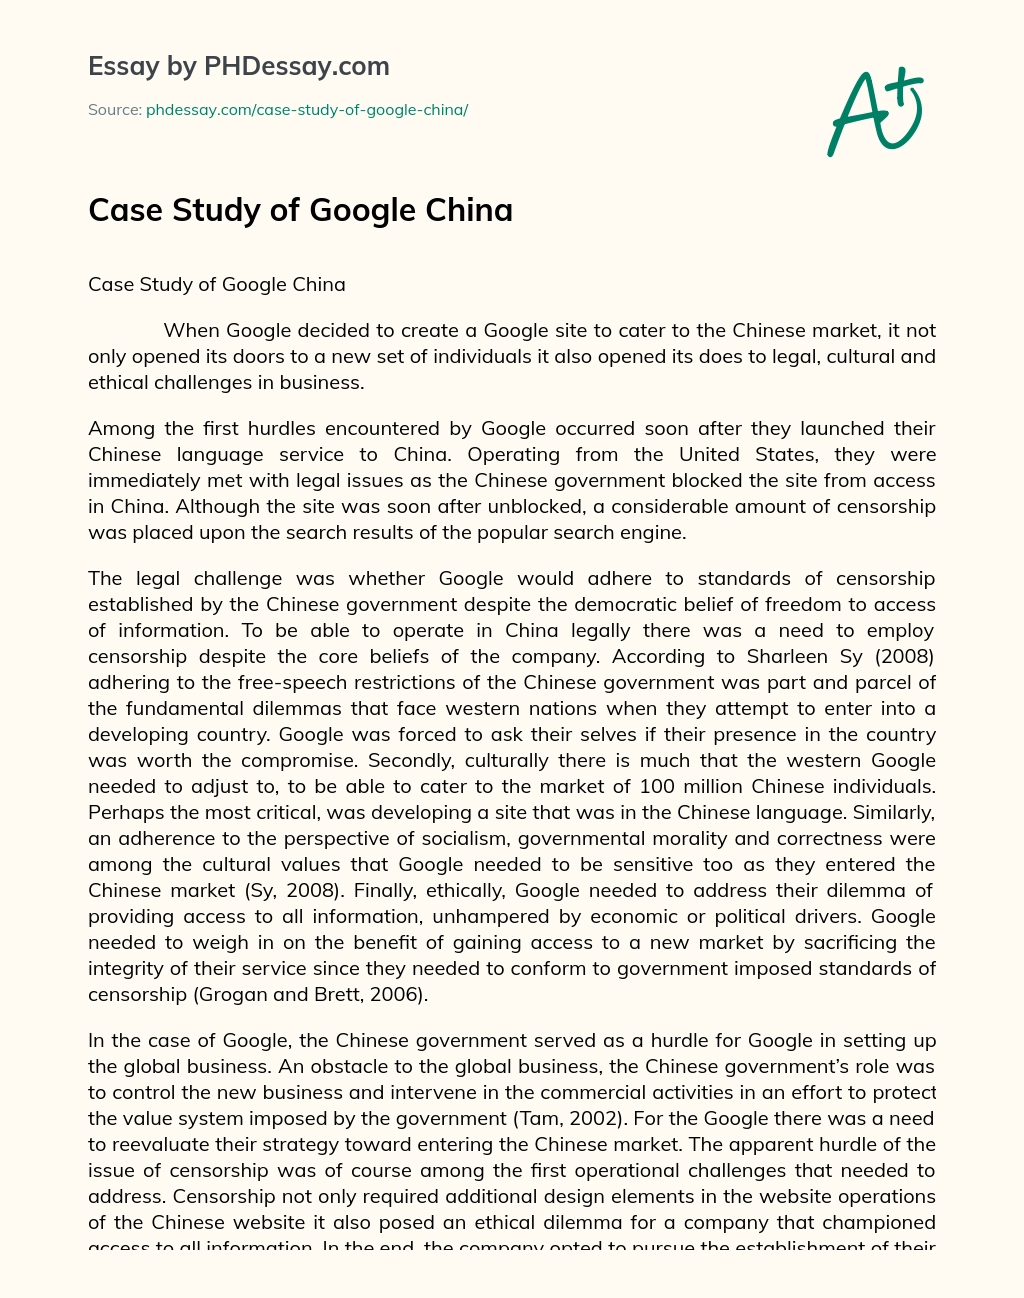 Case Study of Google China essay